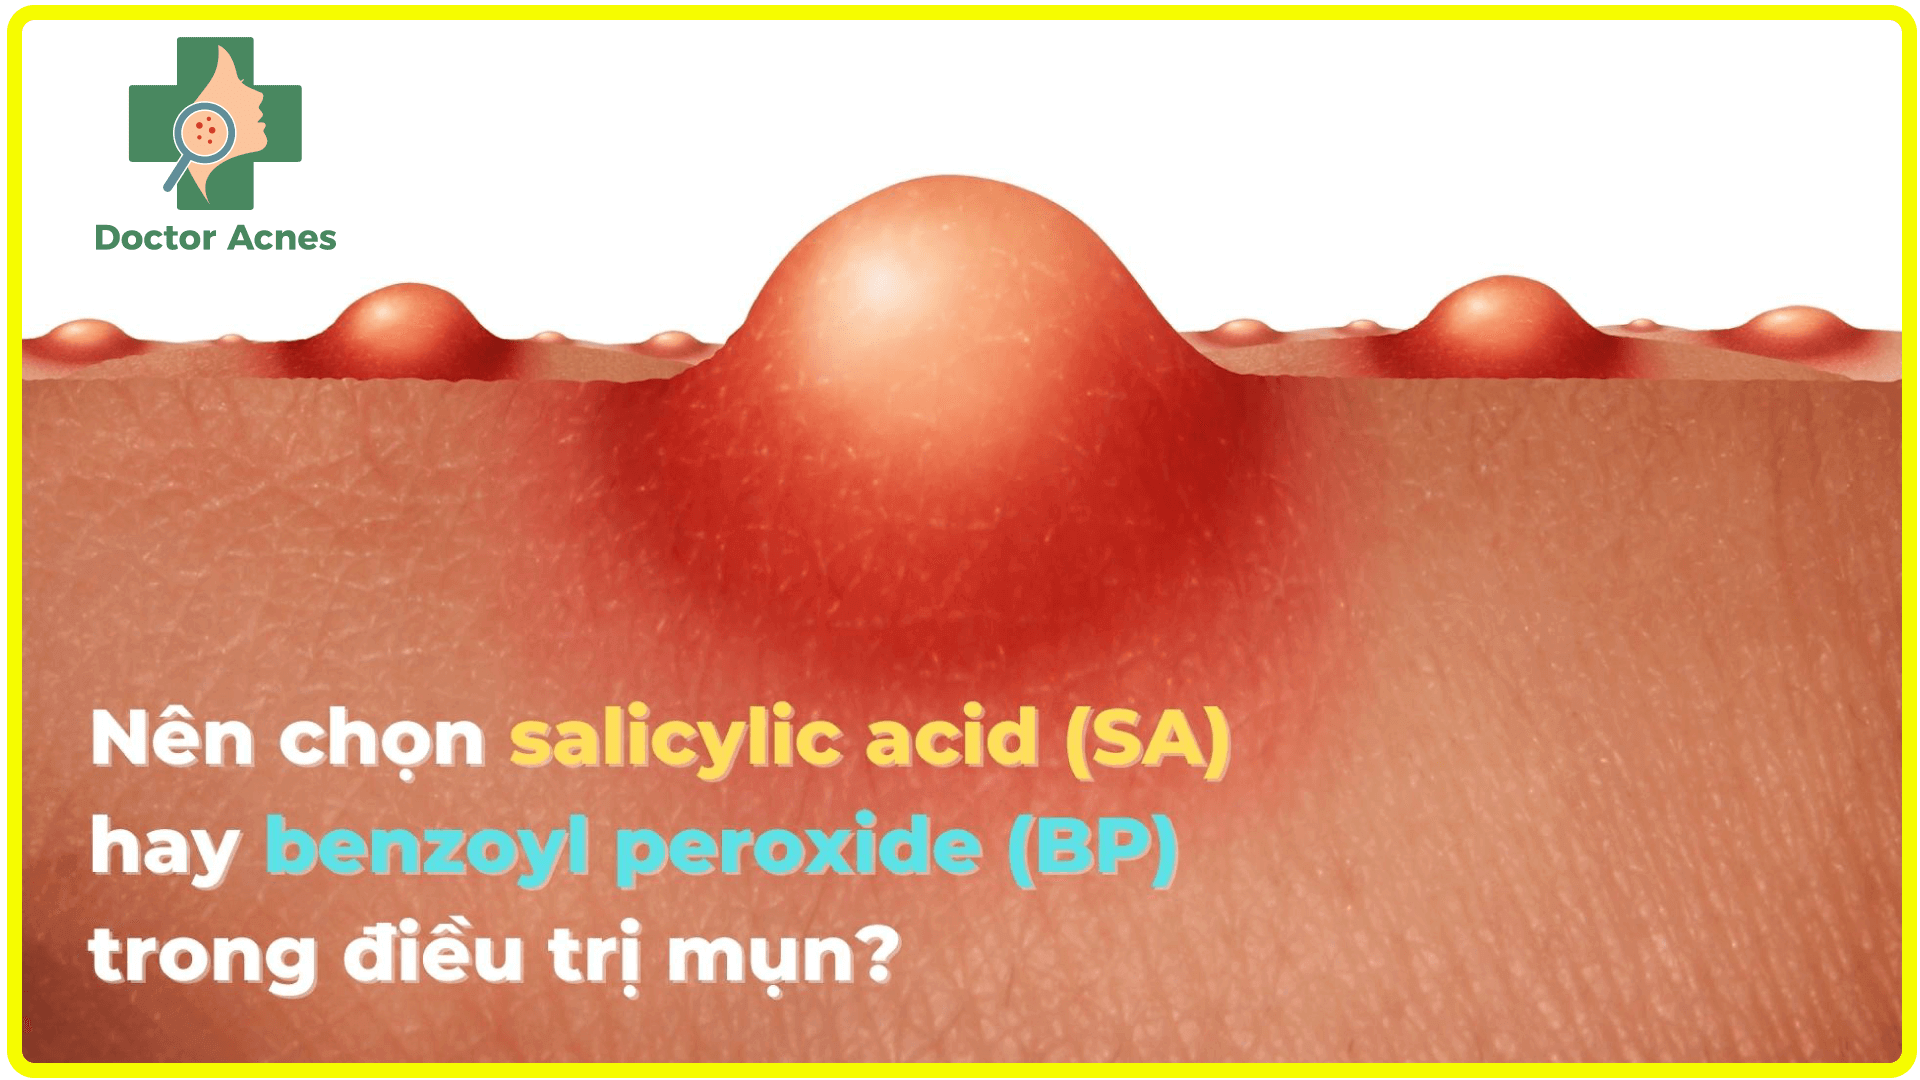 Trị mụn nên dùng acid salicylic hay benzoyl peroxide?